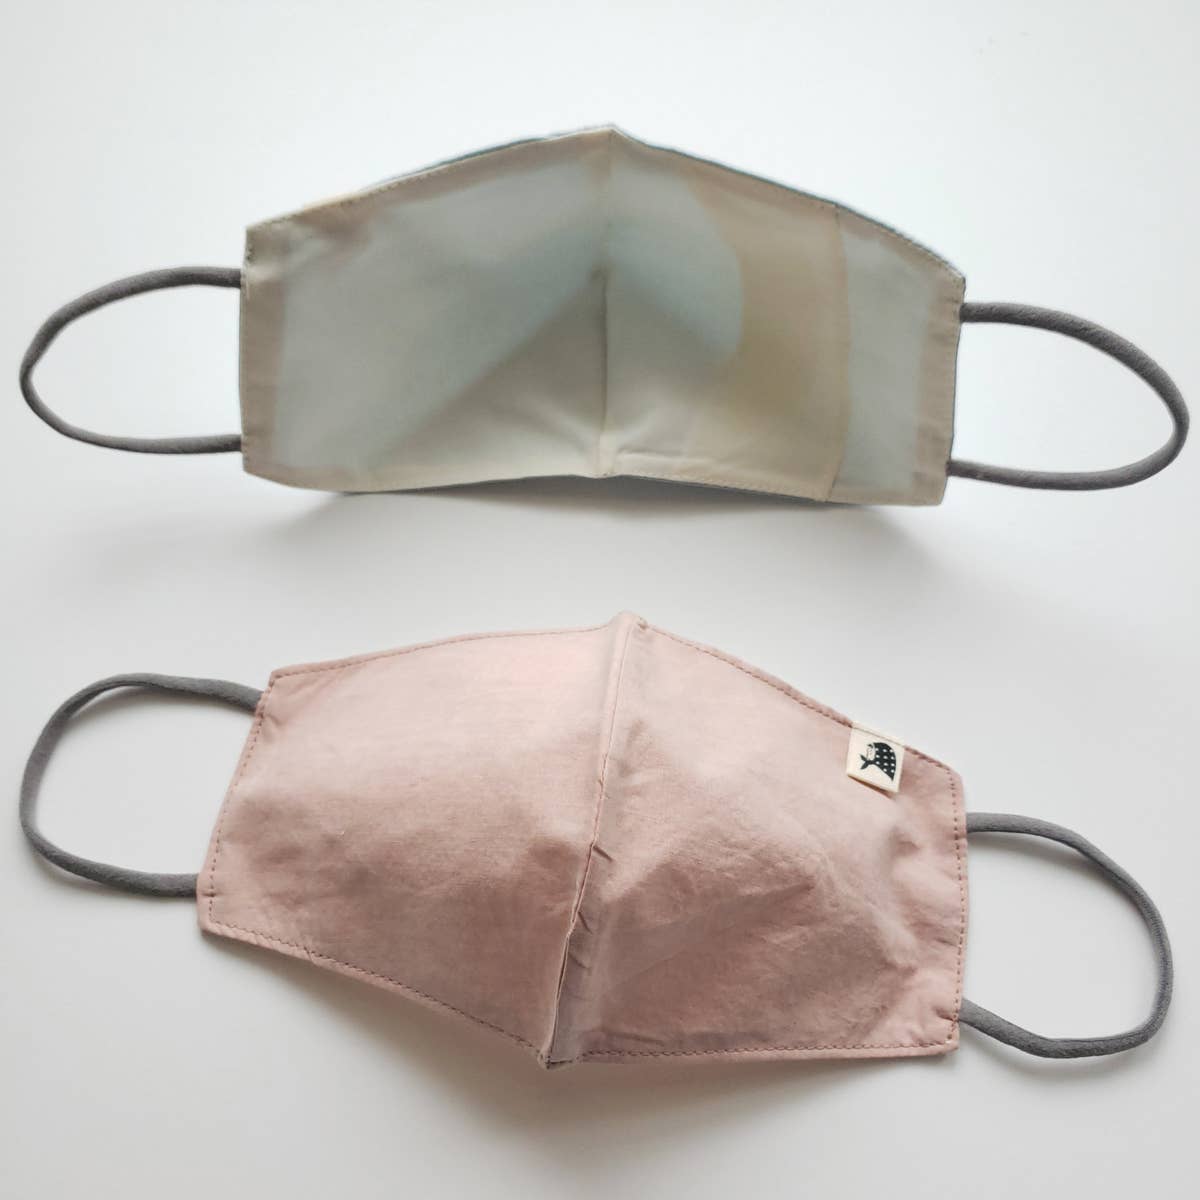 Adult Reusable/Washable Cotton Face Mask - Optional Filter Pocket - 2 colors